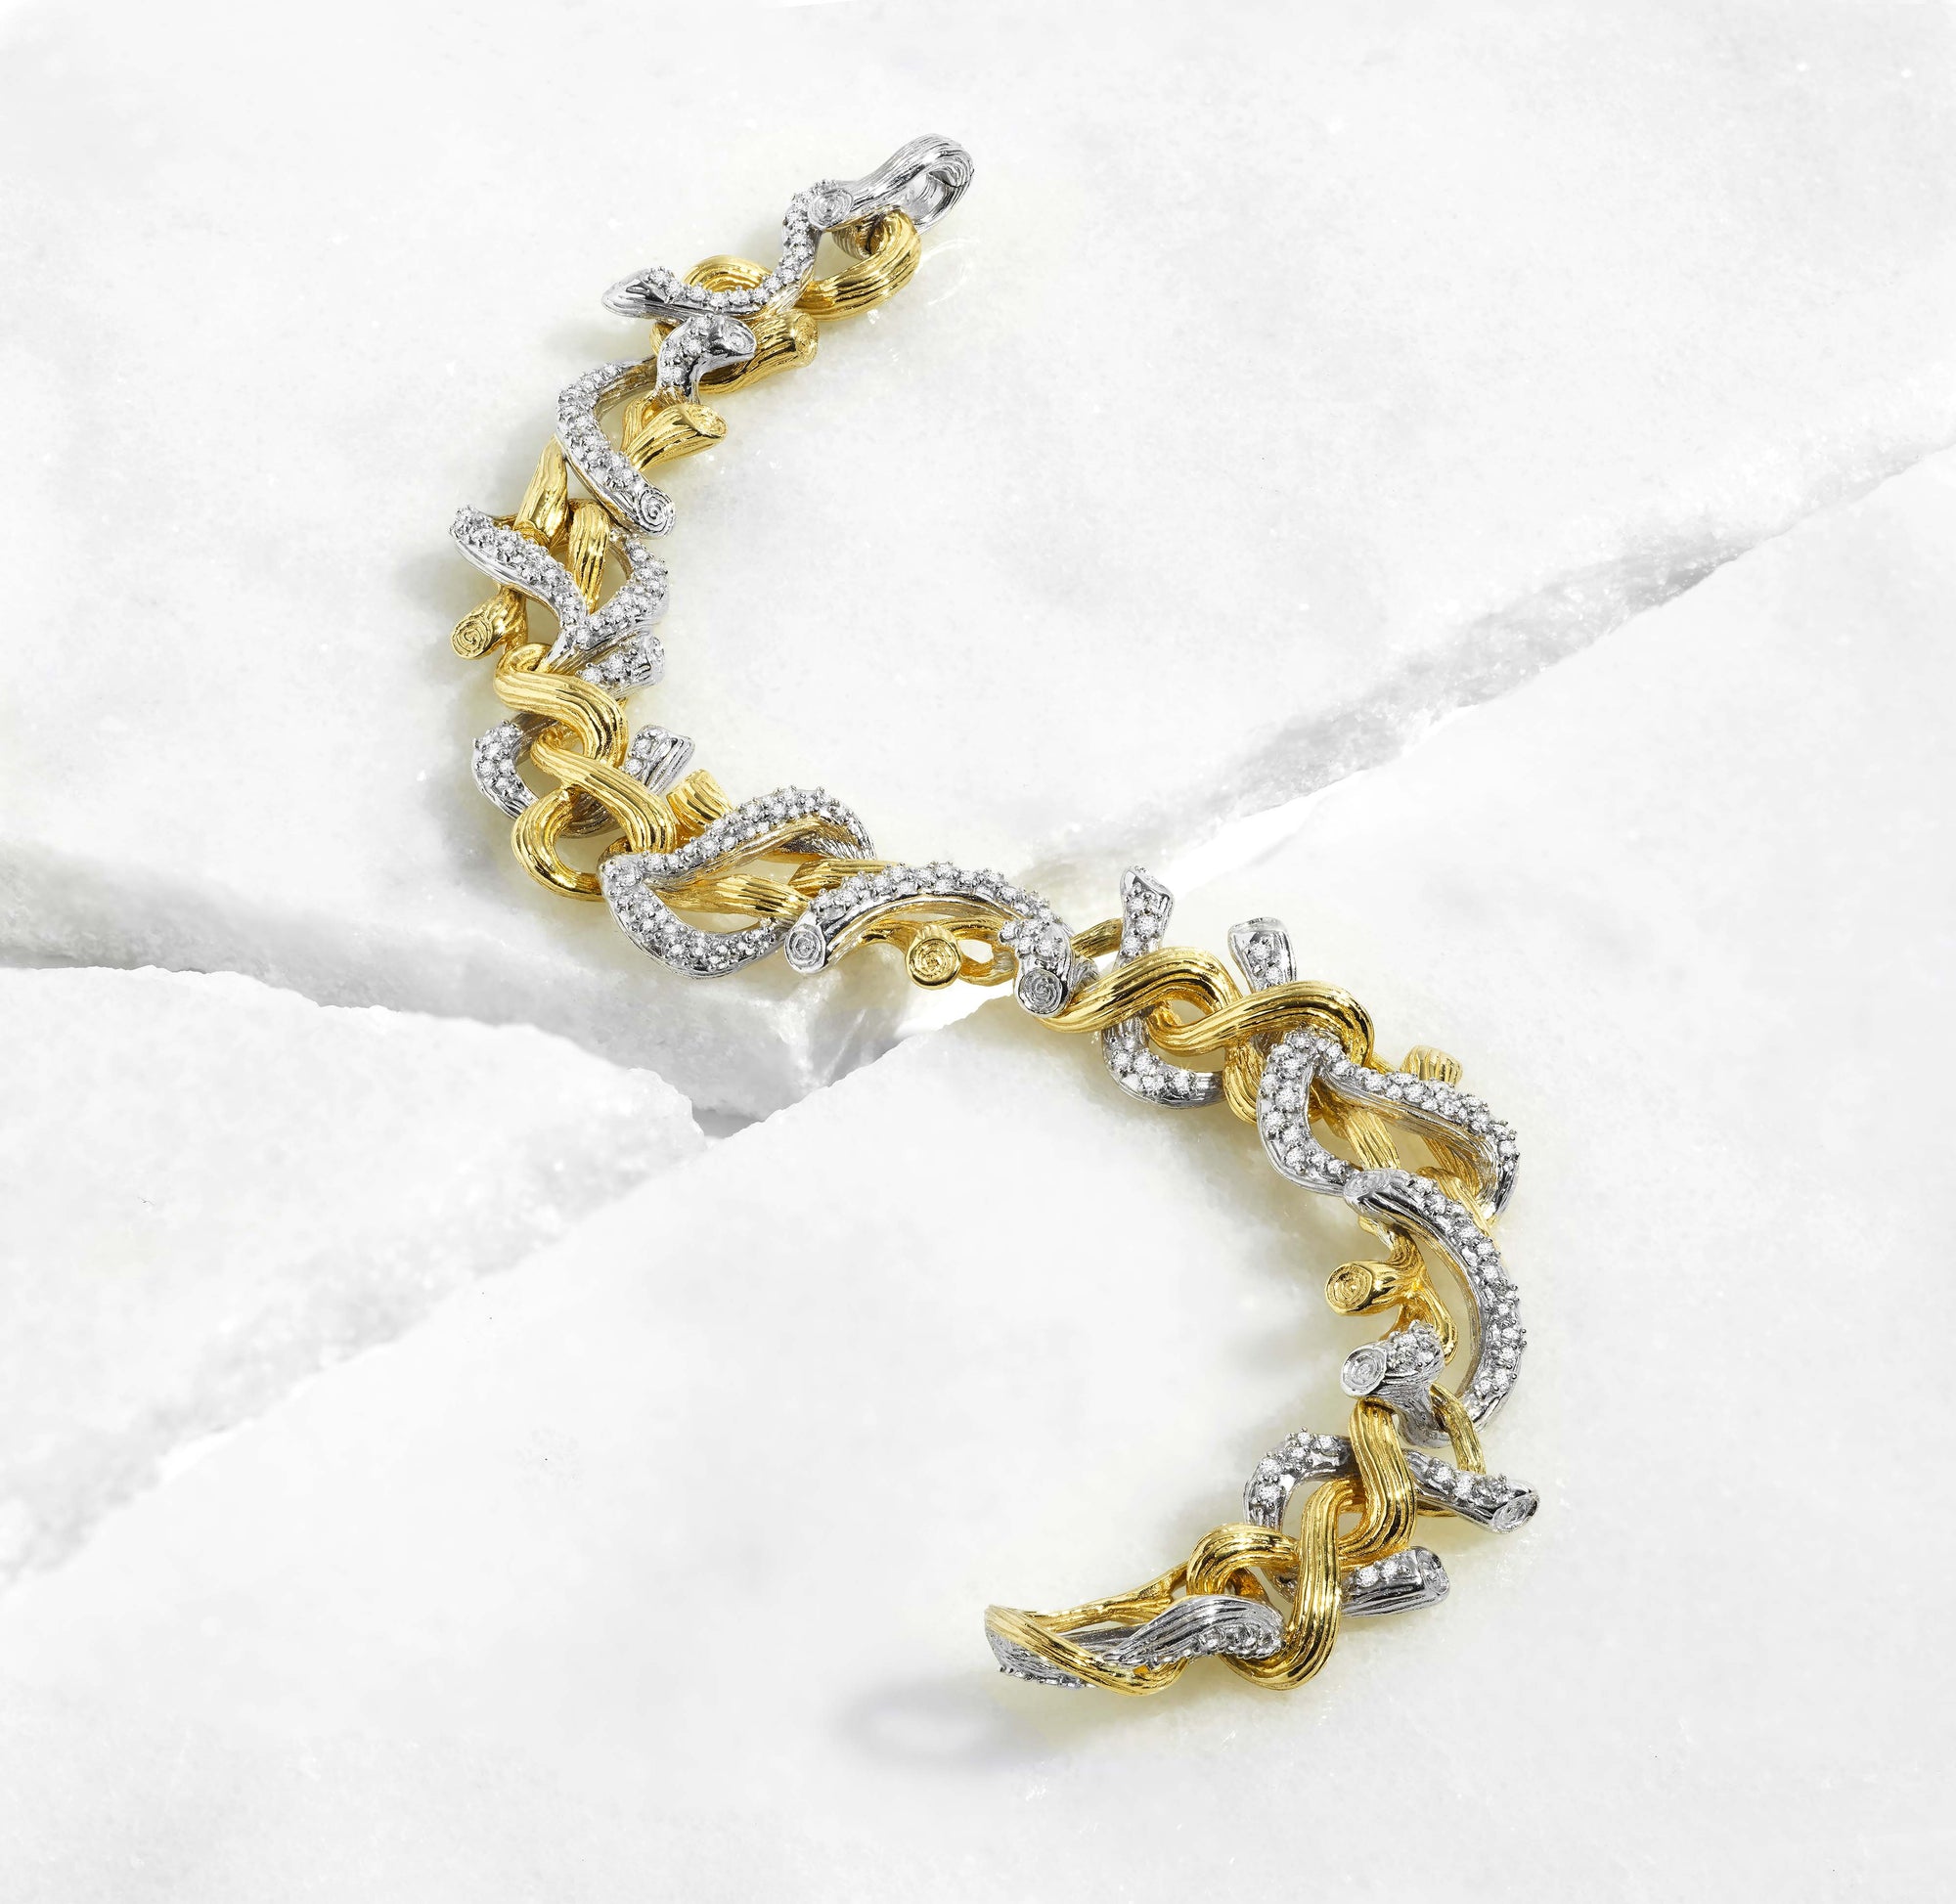 Michael Aram Branch Coral Bracelet with Diamonds